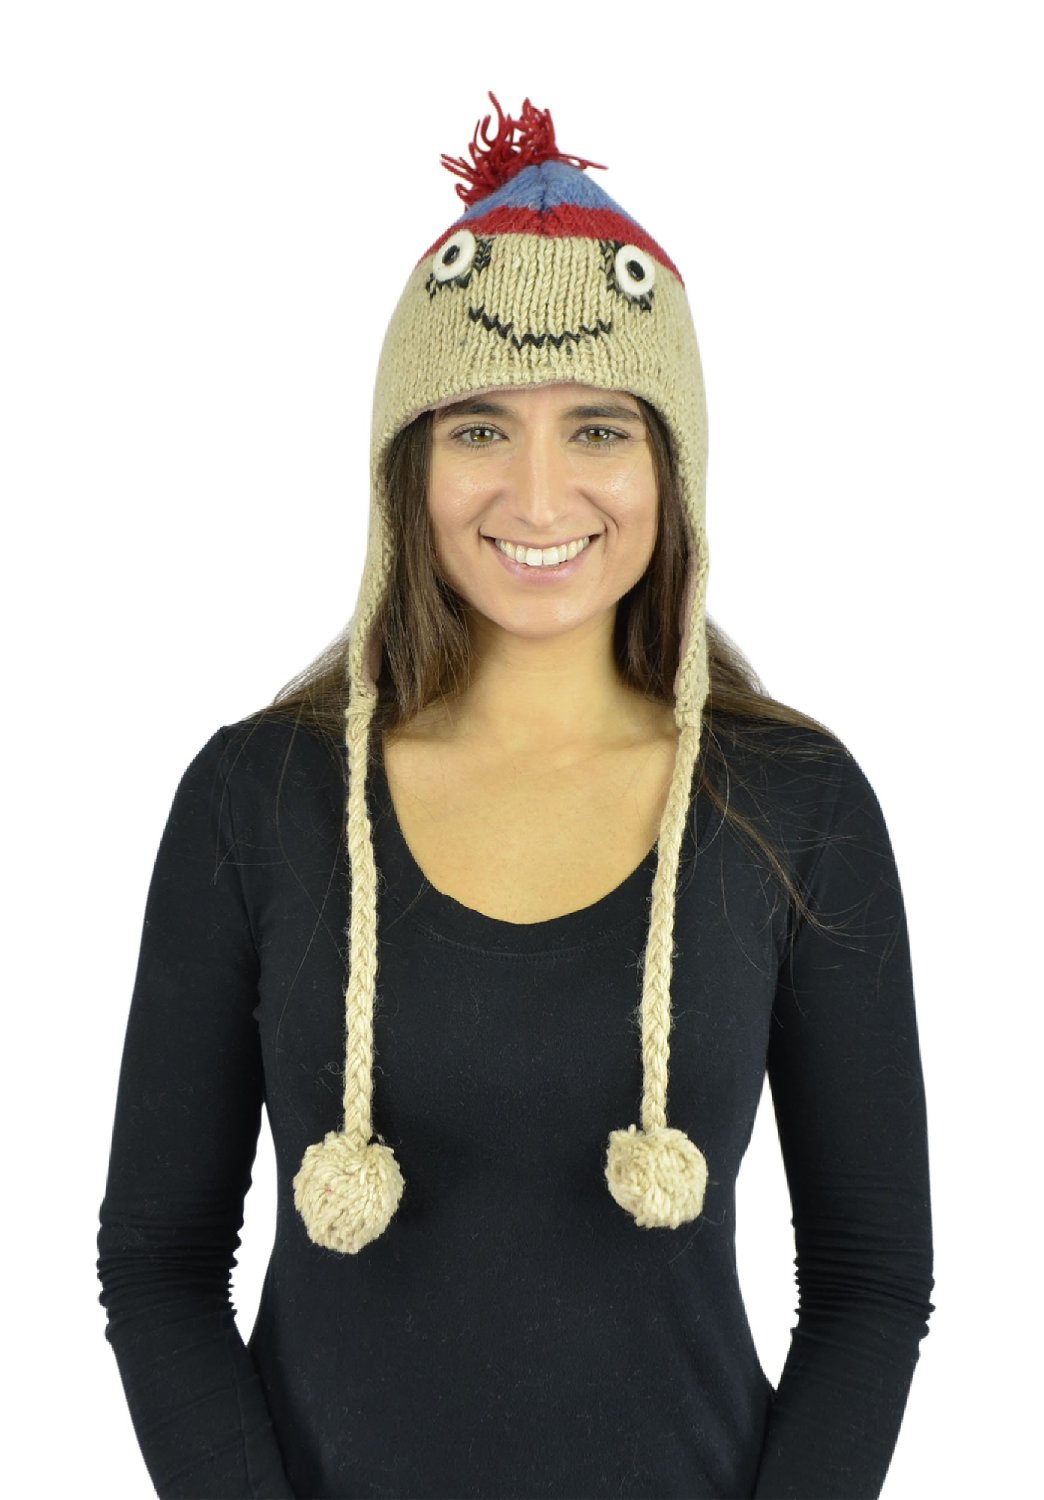 Belle Donne - Unisex Winter Knit Atan Animal Hats With Pom Pom - Tan